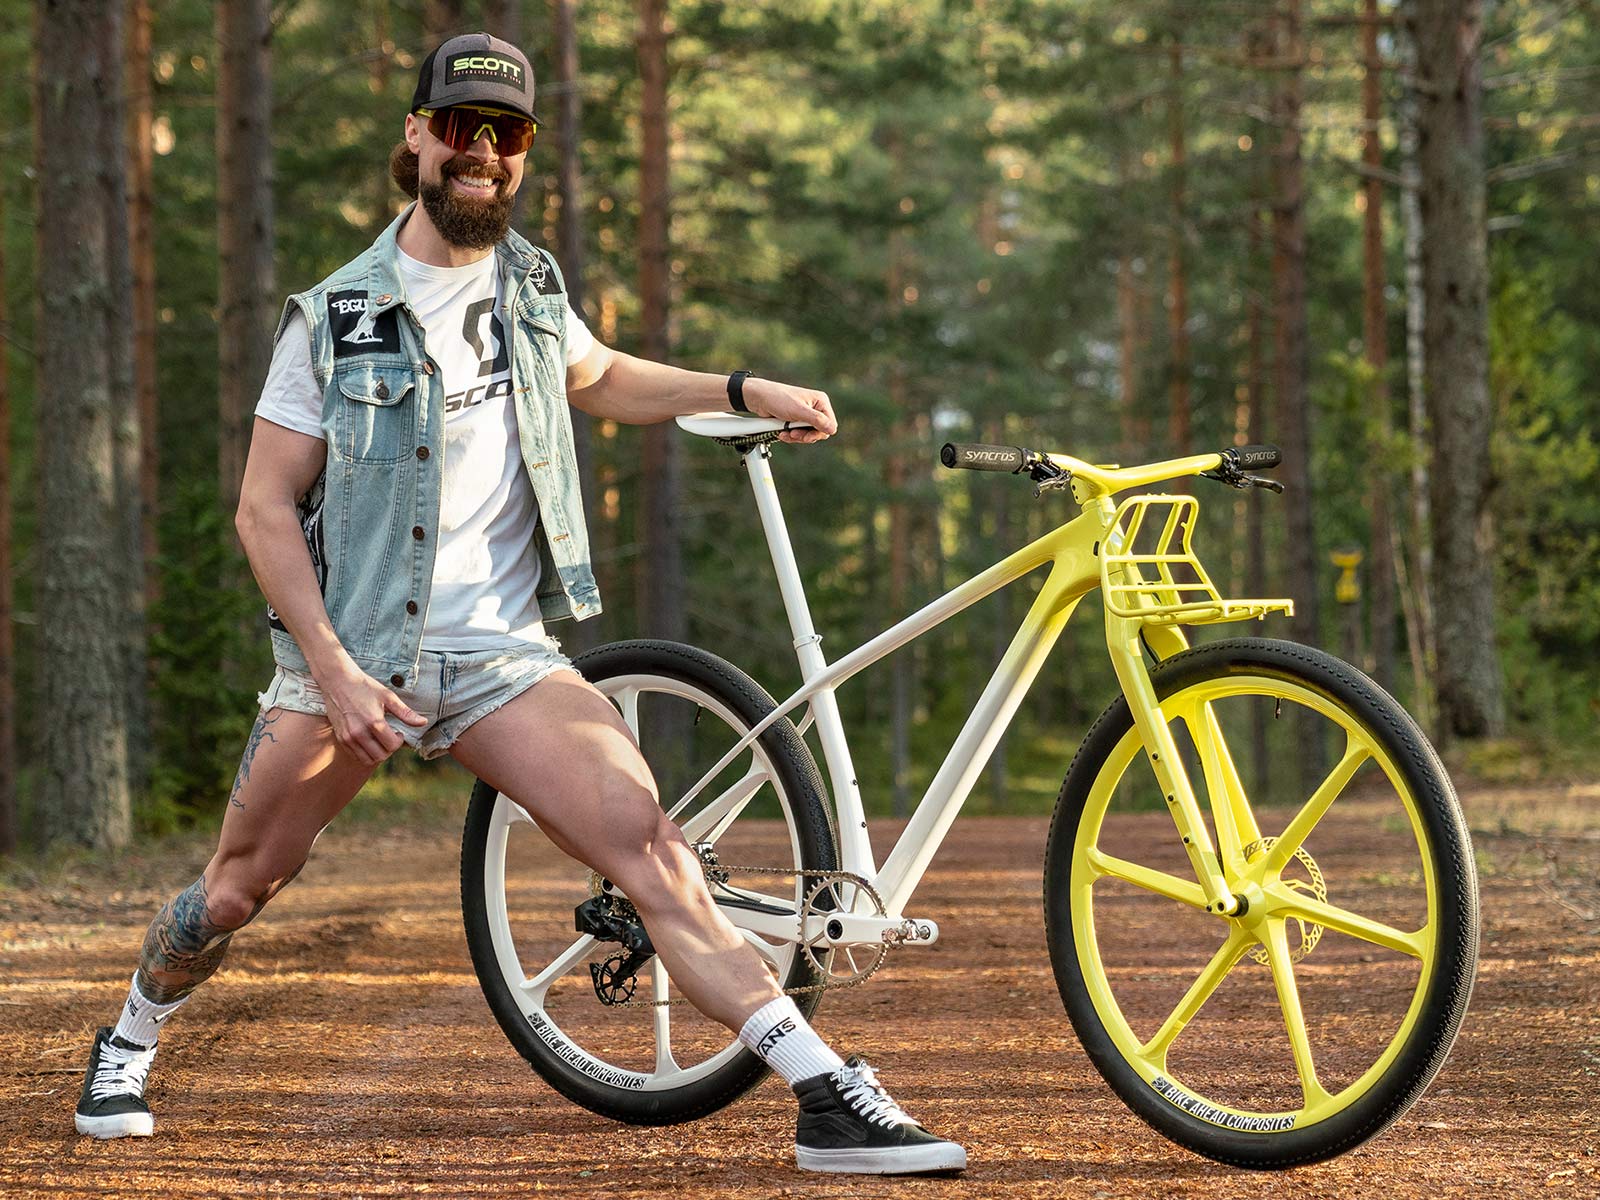 Dangerholm mellow yellow Scott Scale Gravel custom project bike, Gustav Gullholm dream bike builder, photo by Andreas Timfalt, portait